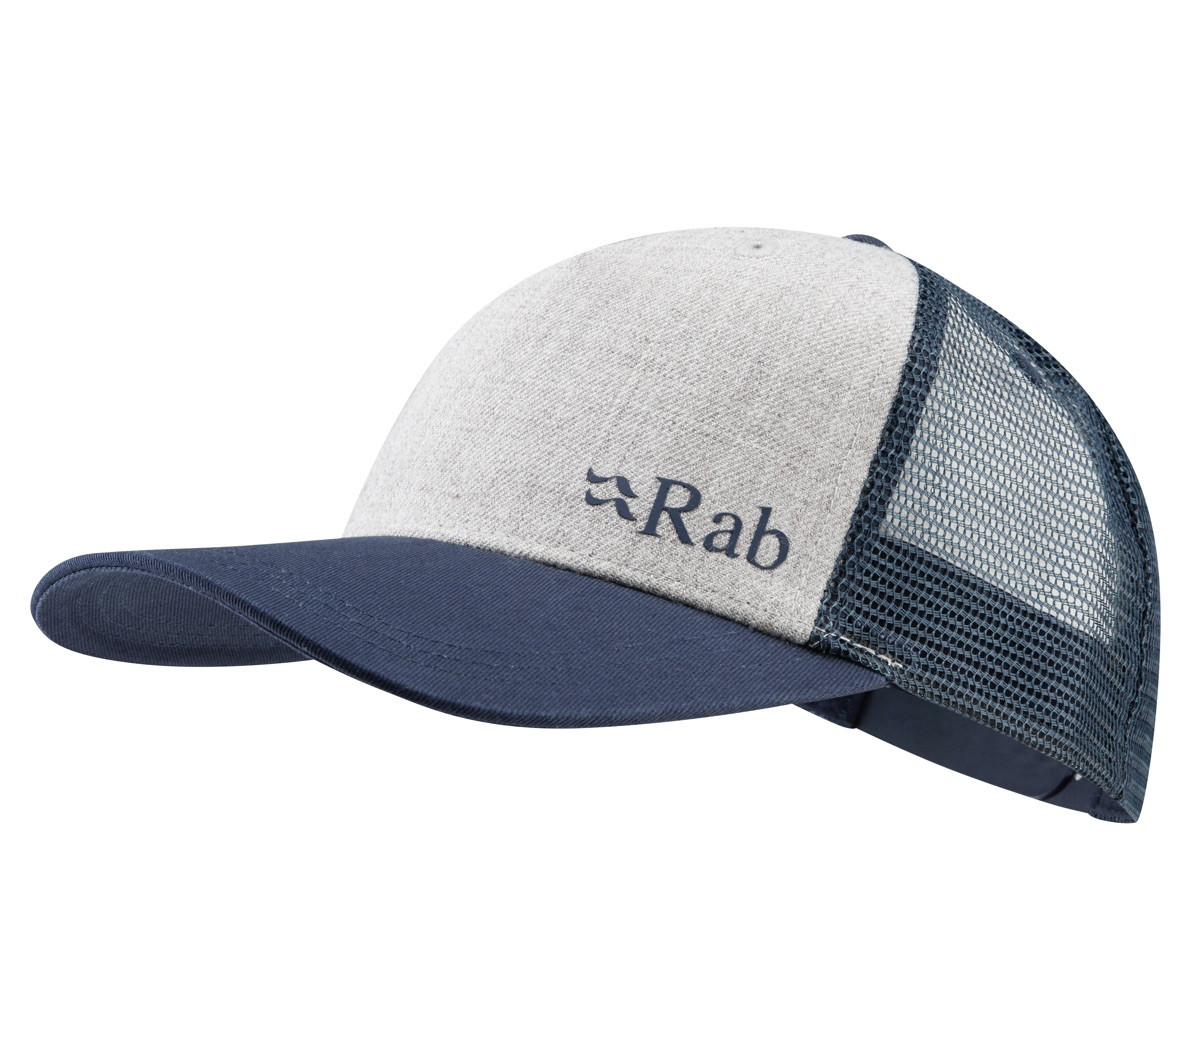 Rab Trucker logo cap navy/grey